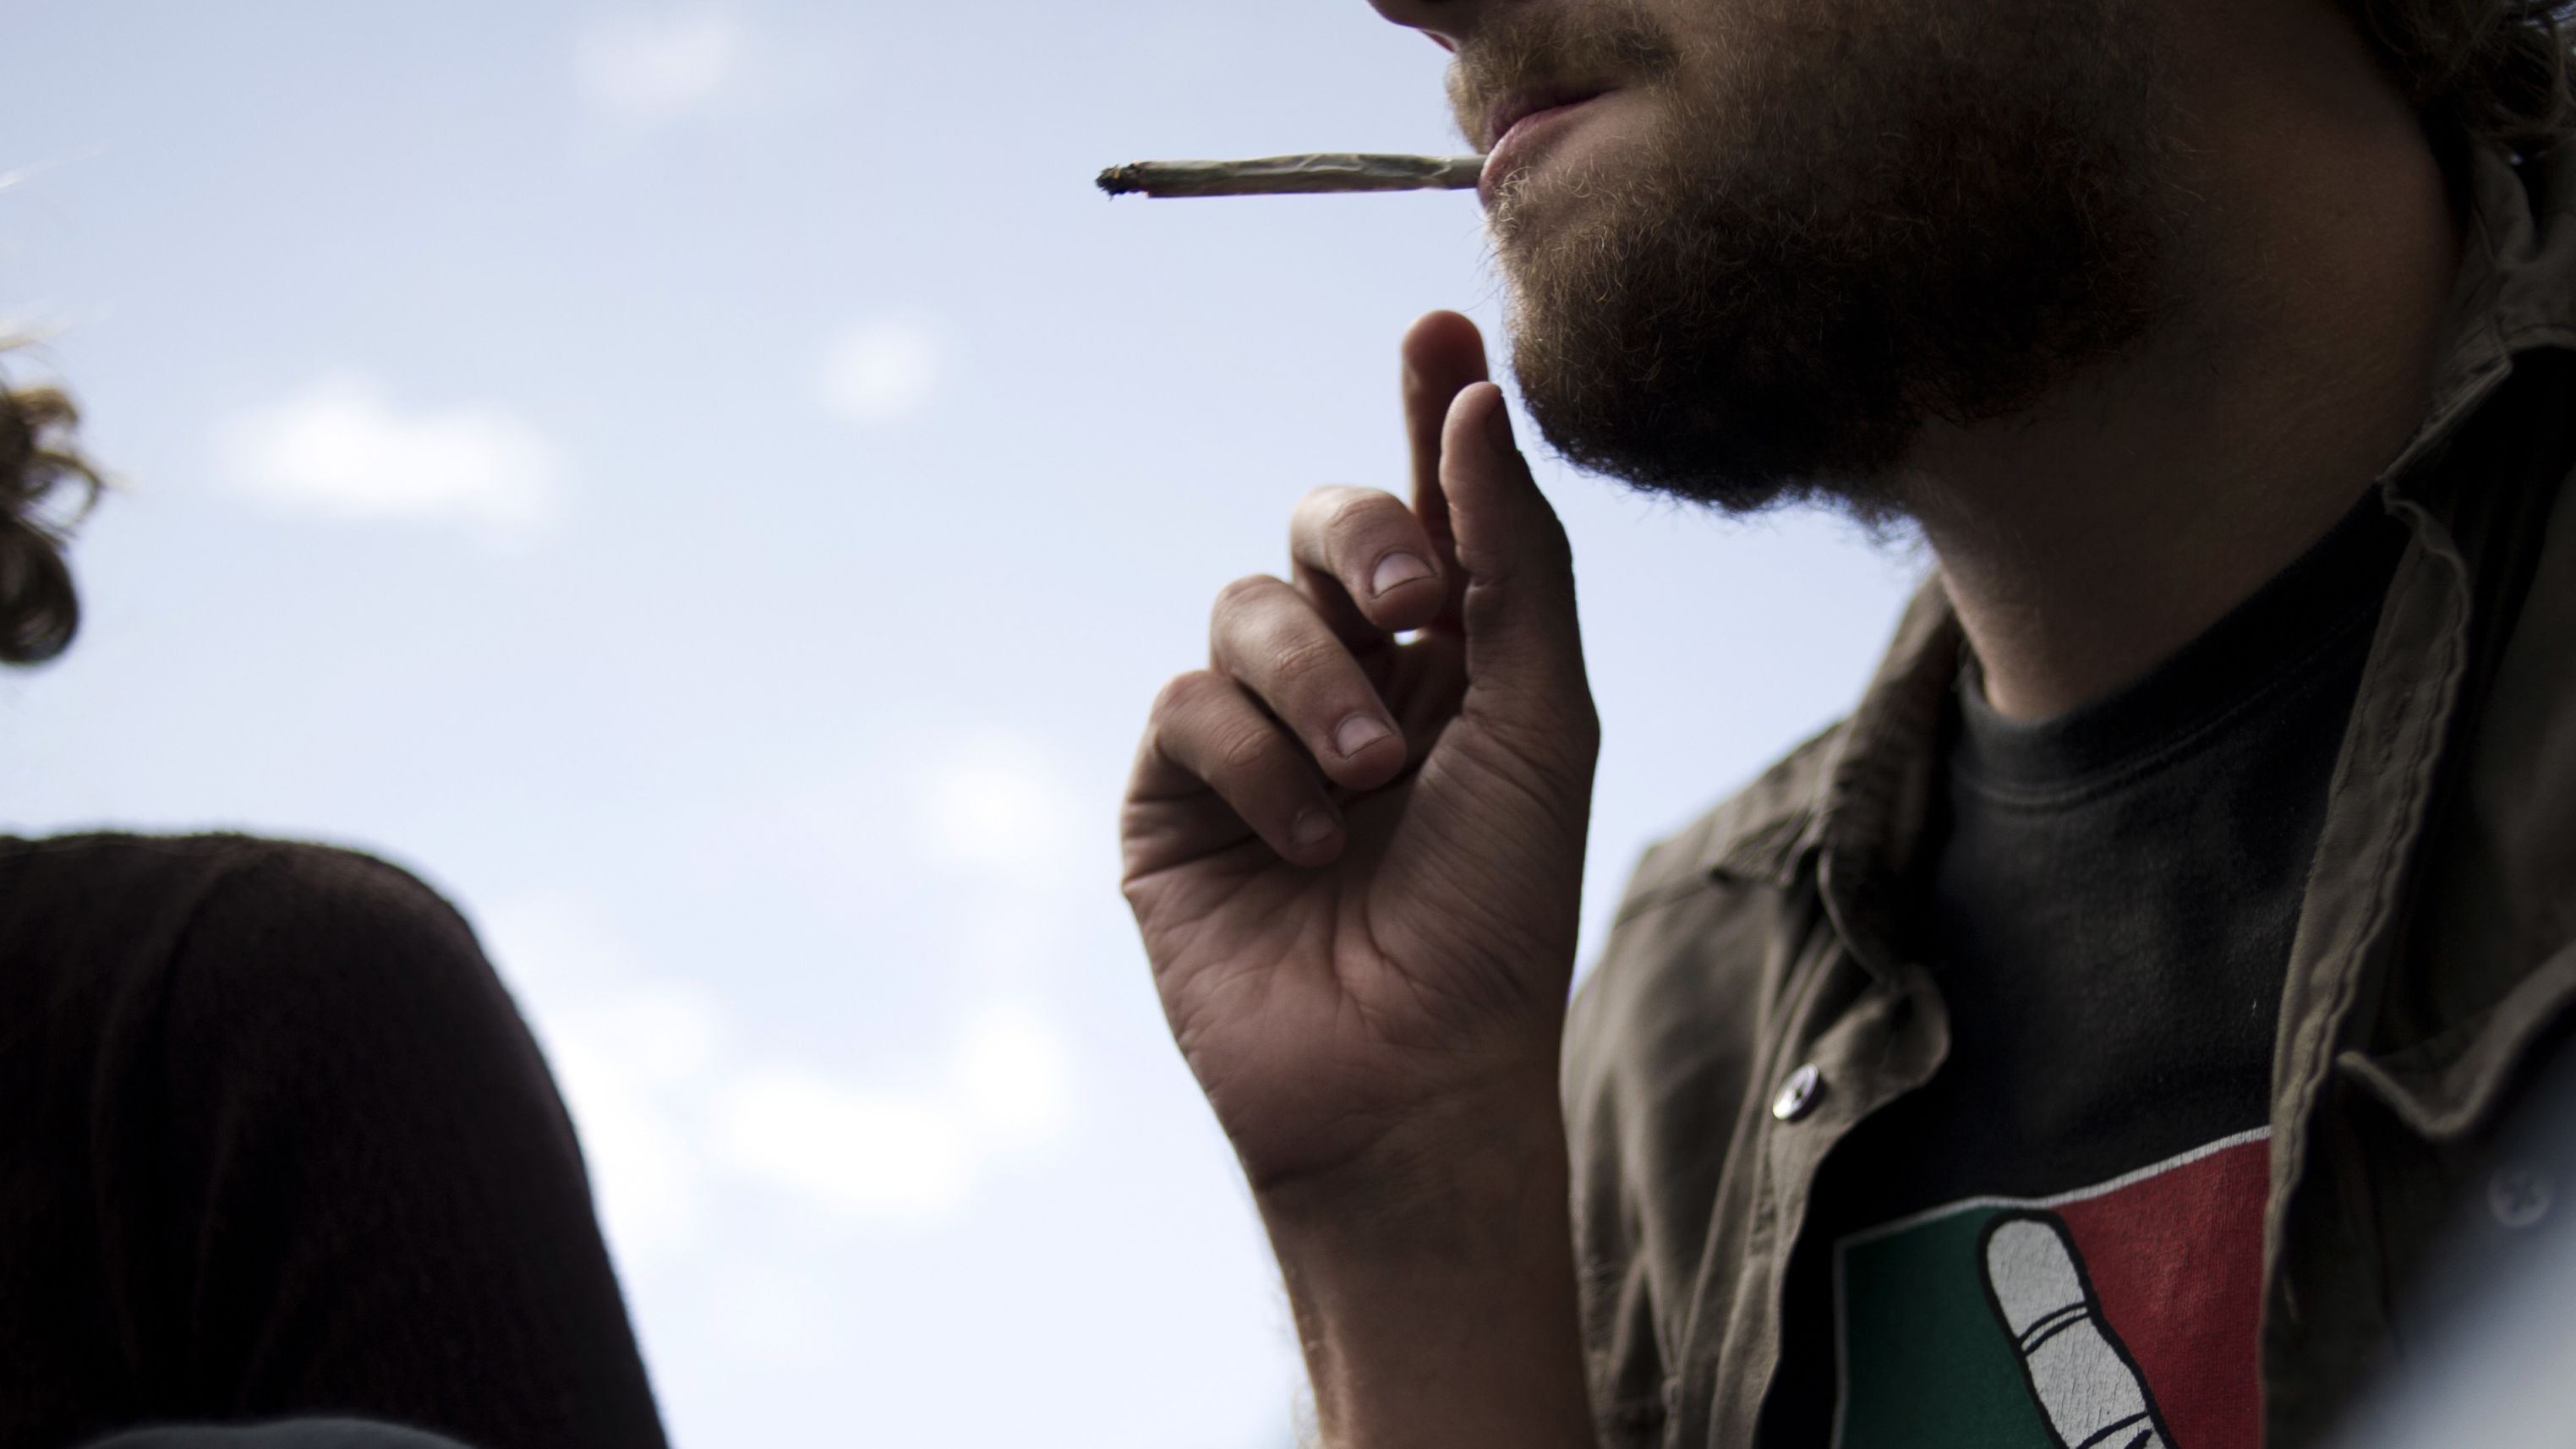 Legalizing marijuana will lead to more drug abuse, says William Bennett.